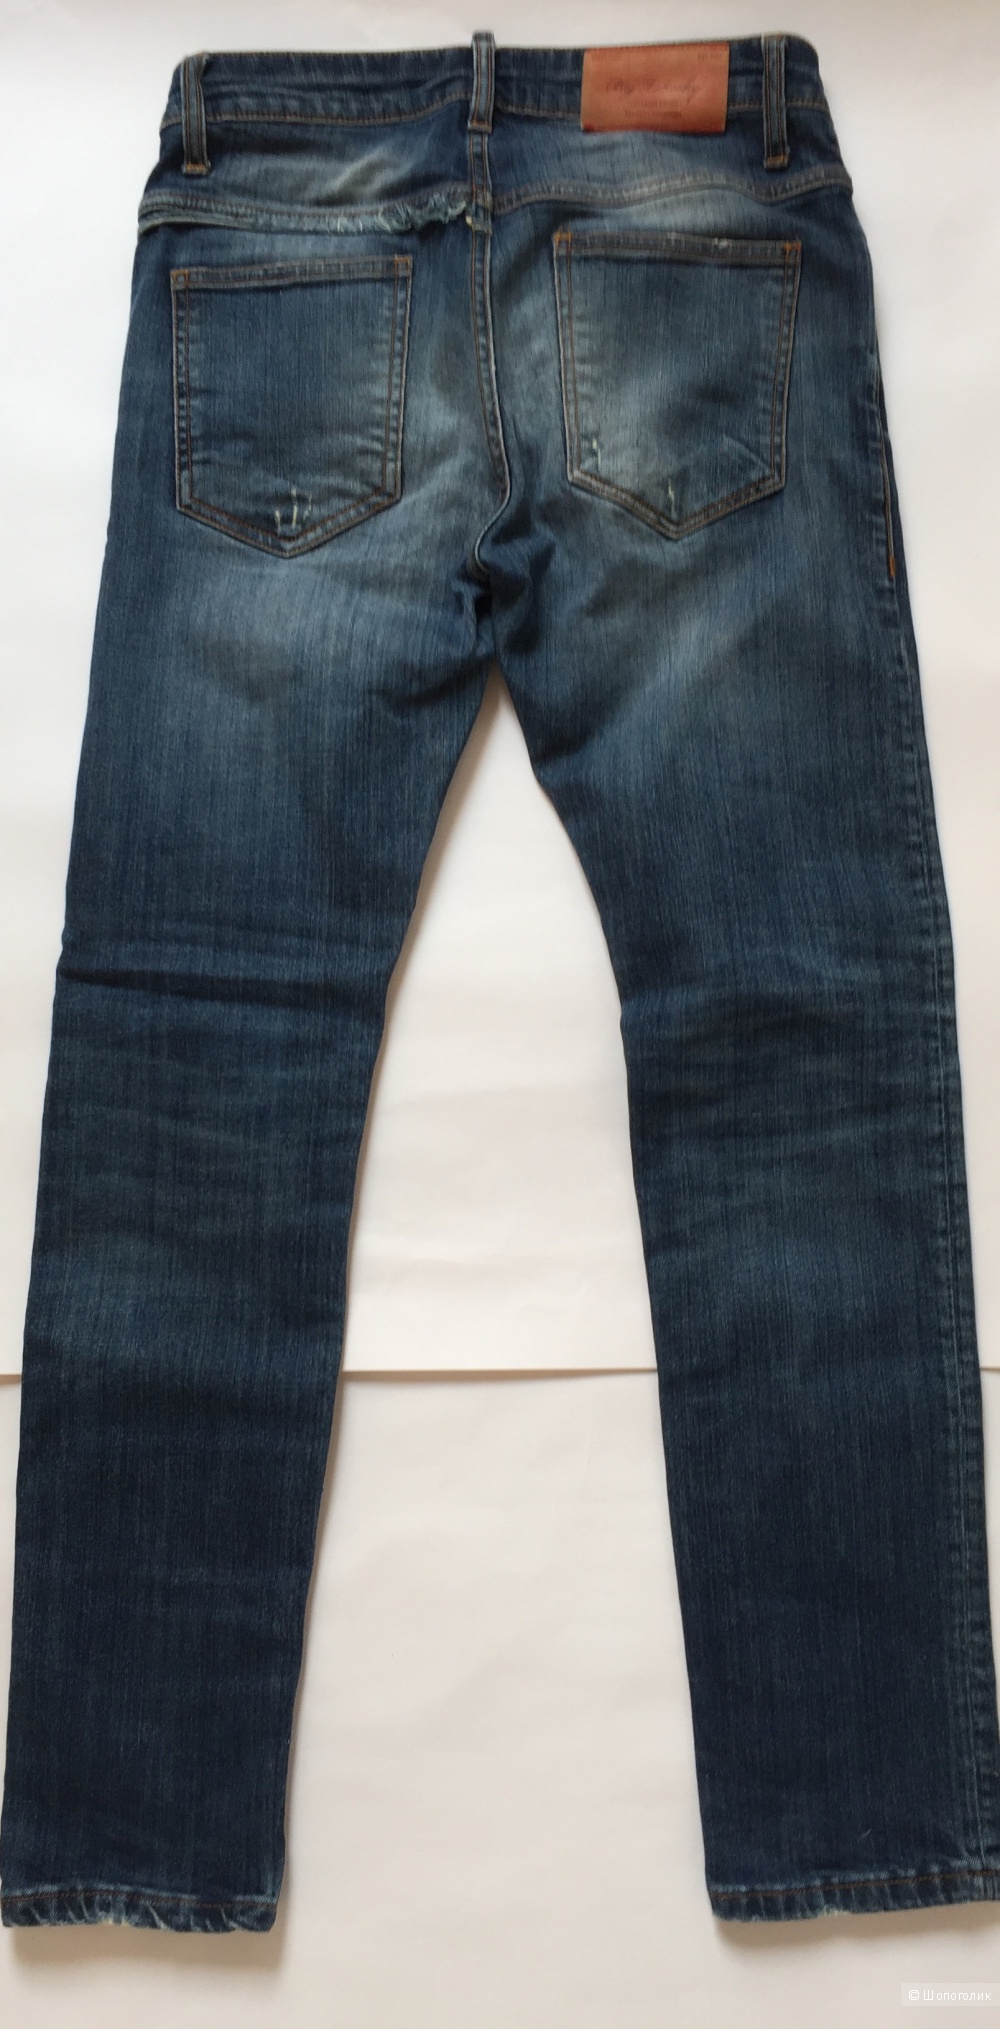 Дизайнерские джинсы Takeshy Kurosawa 44/46